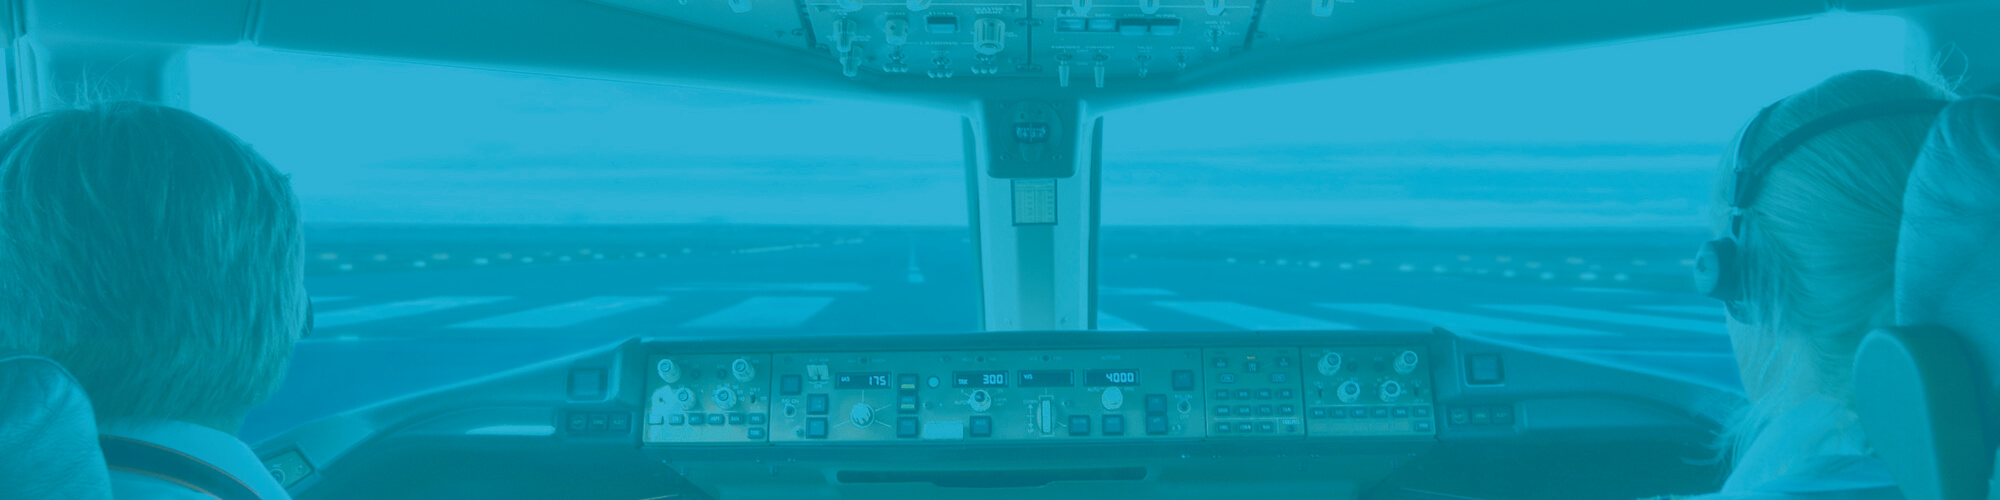 Illustration Cockpit